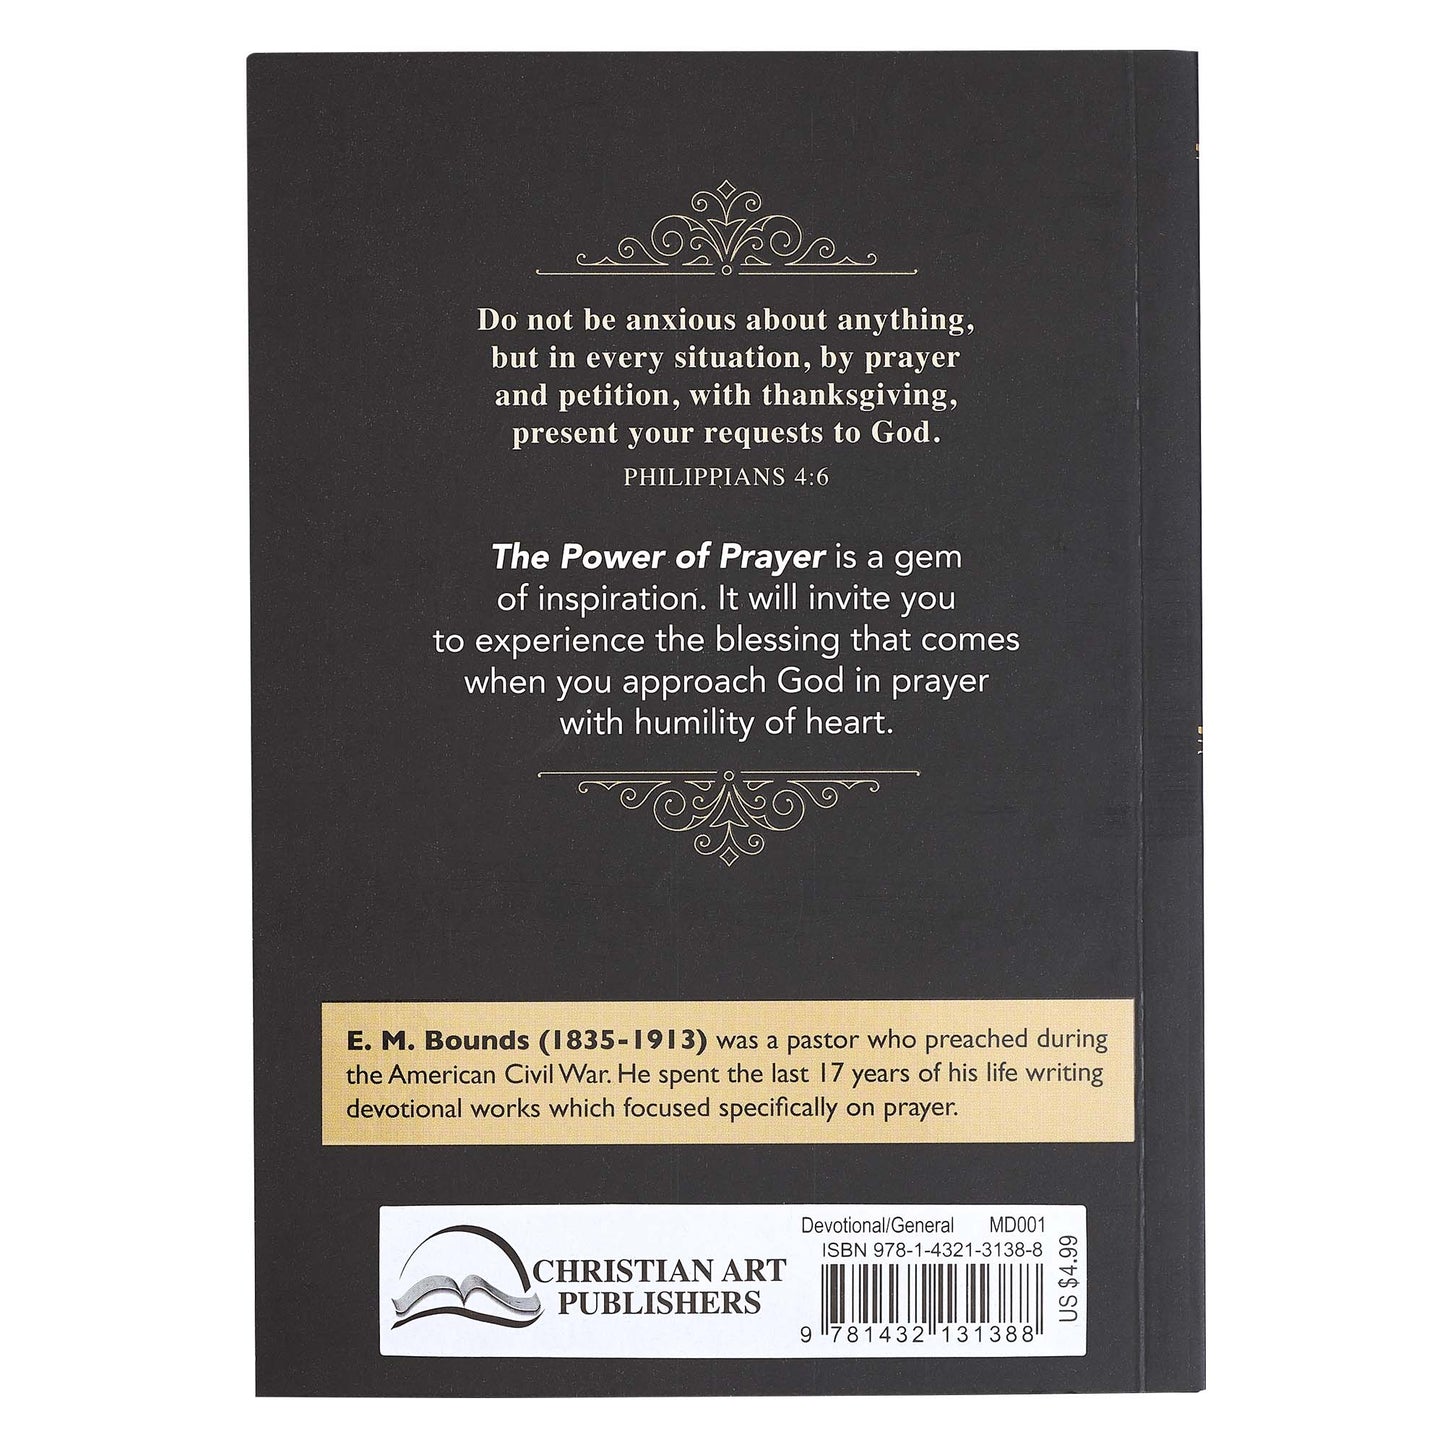 The Power of Prayer Mini Devotional - The Christian Gift Company